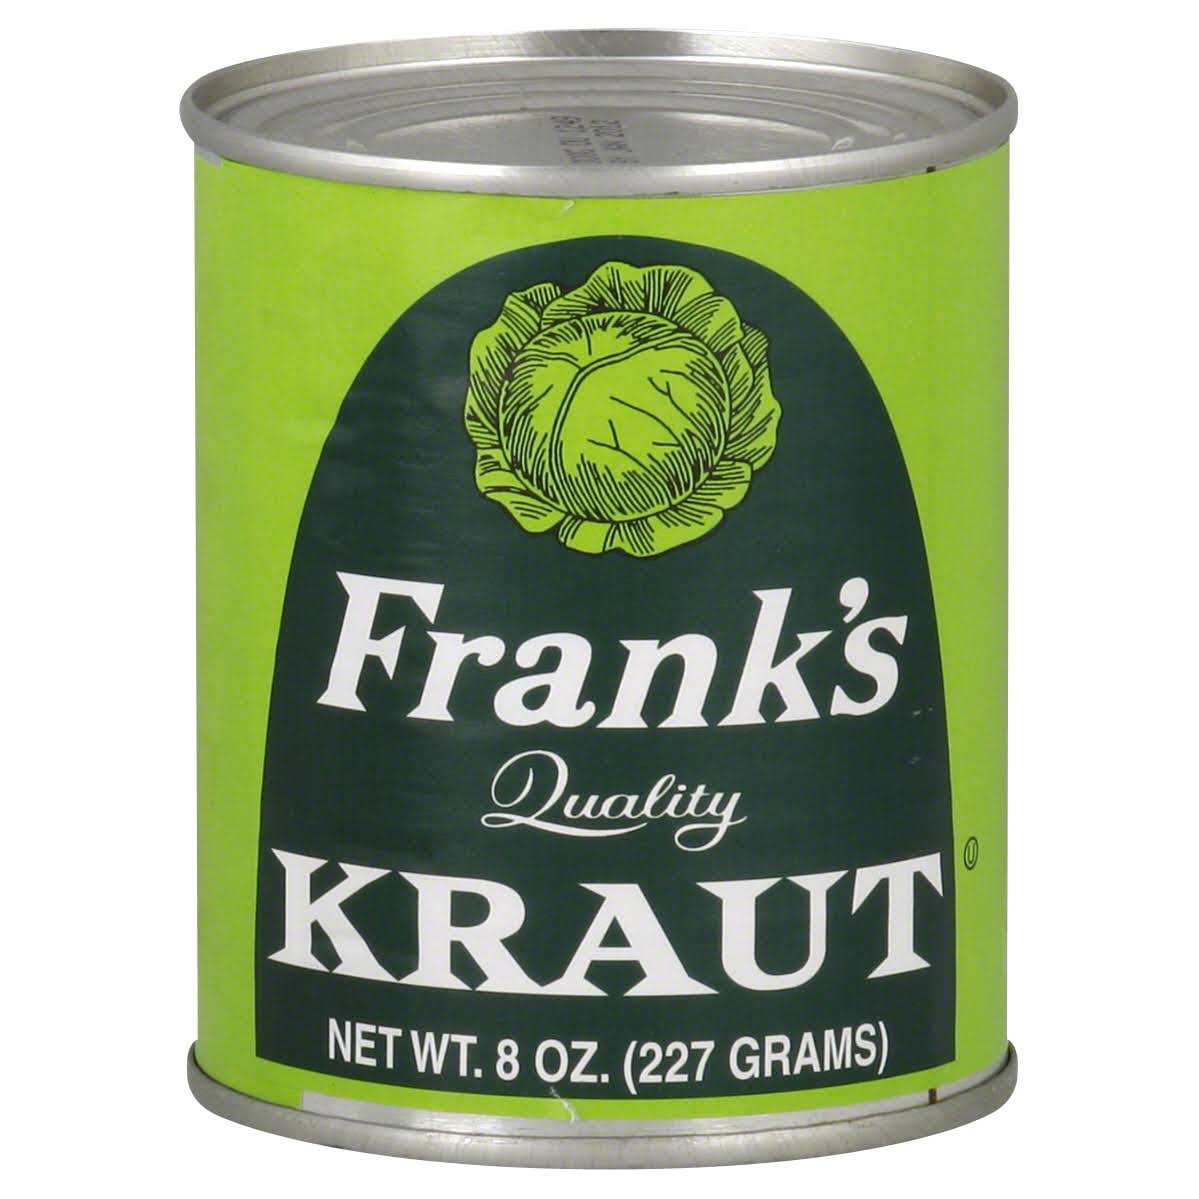 Franks Kraut - 8 oz